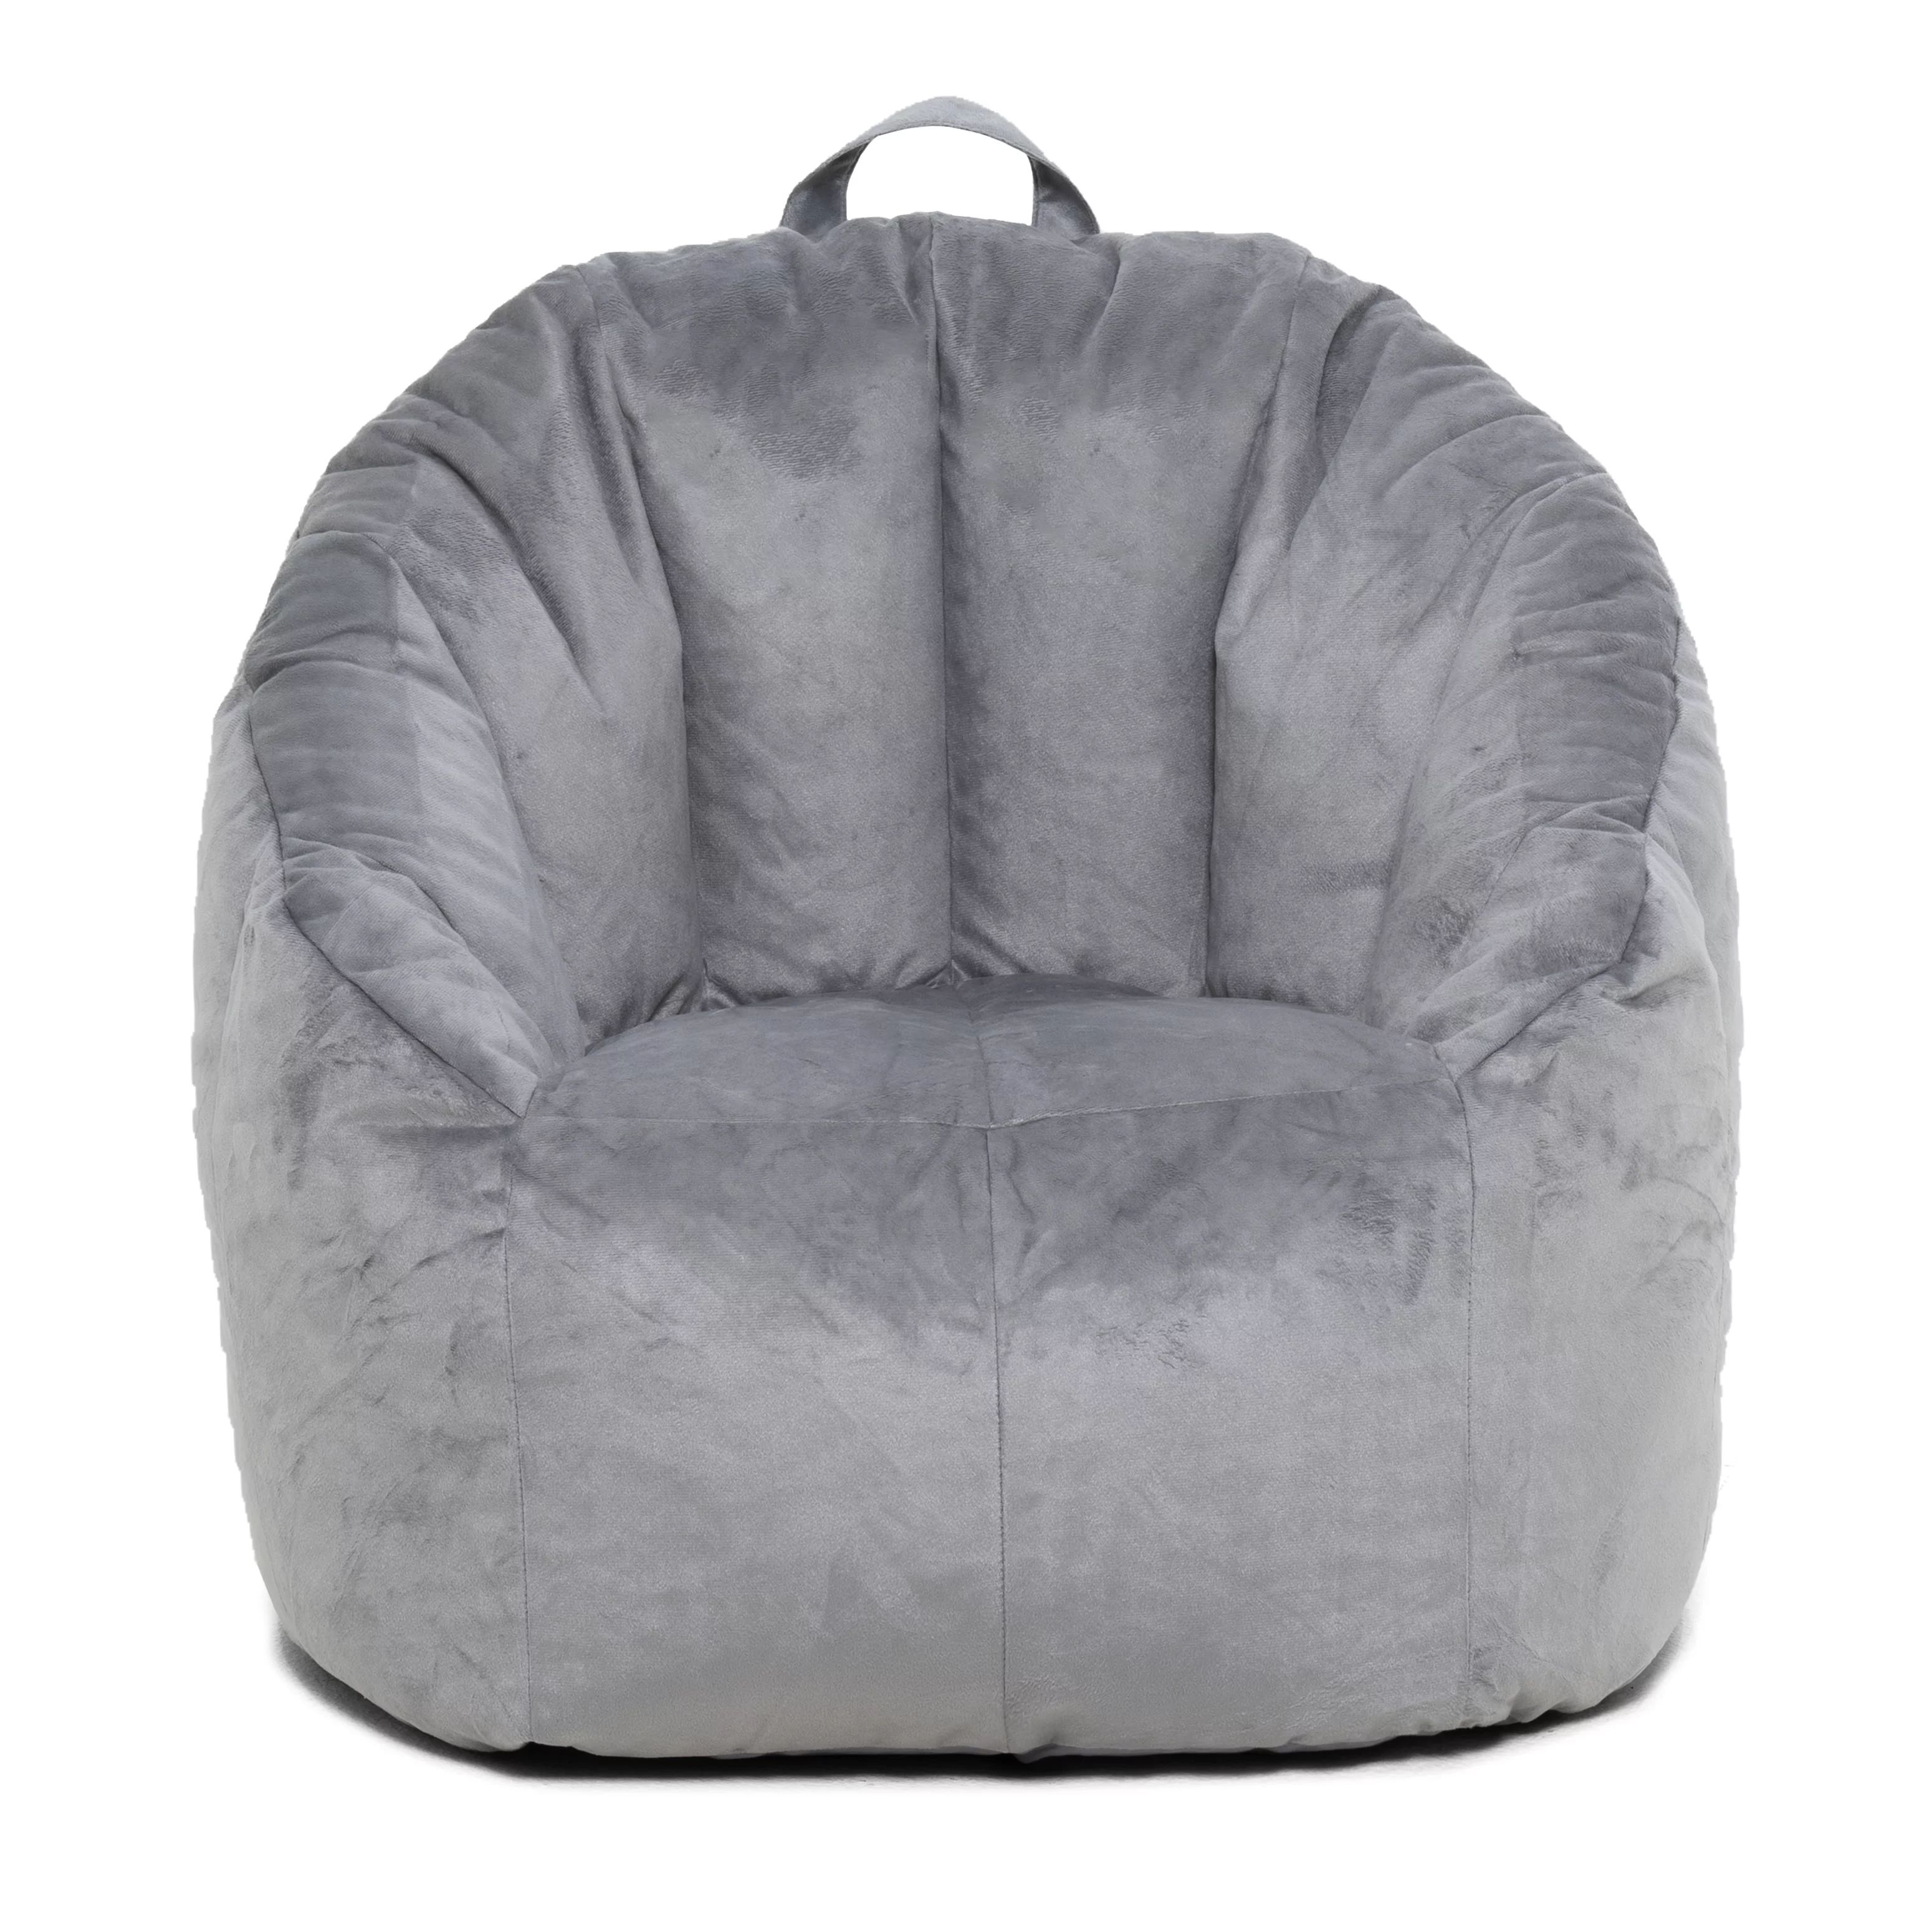 Big Joe Joey Bean Bag Chair, Plush, Kids and Teens, 2.5ft, Gray | Walmart (US)